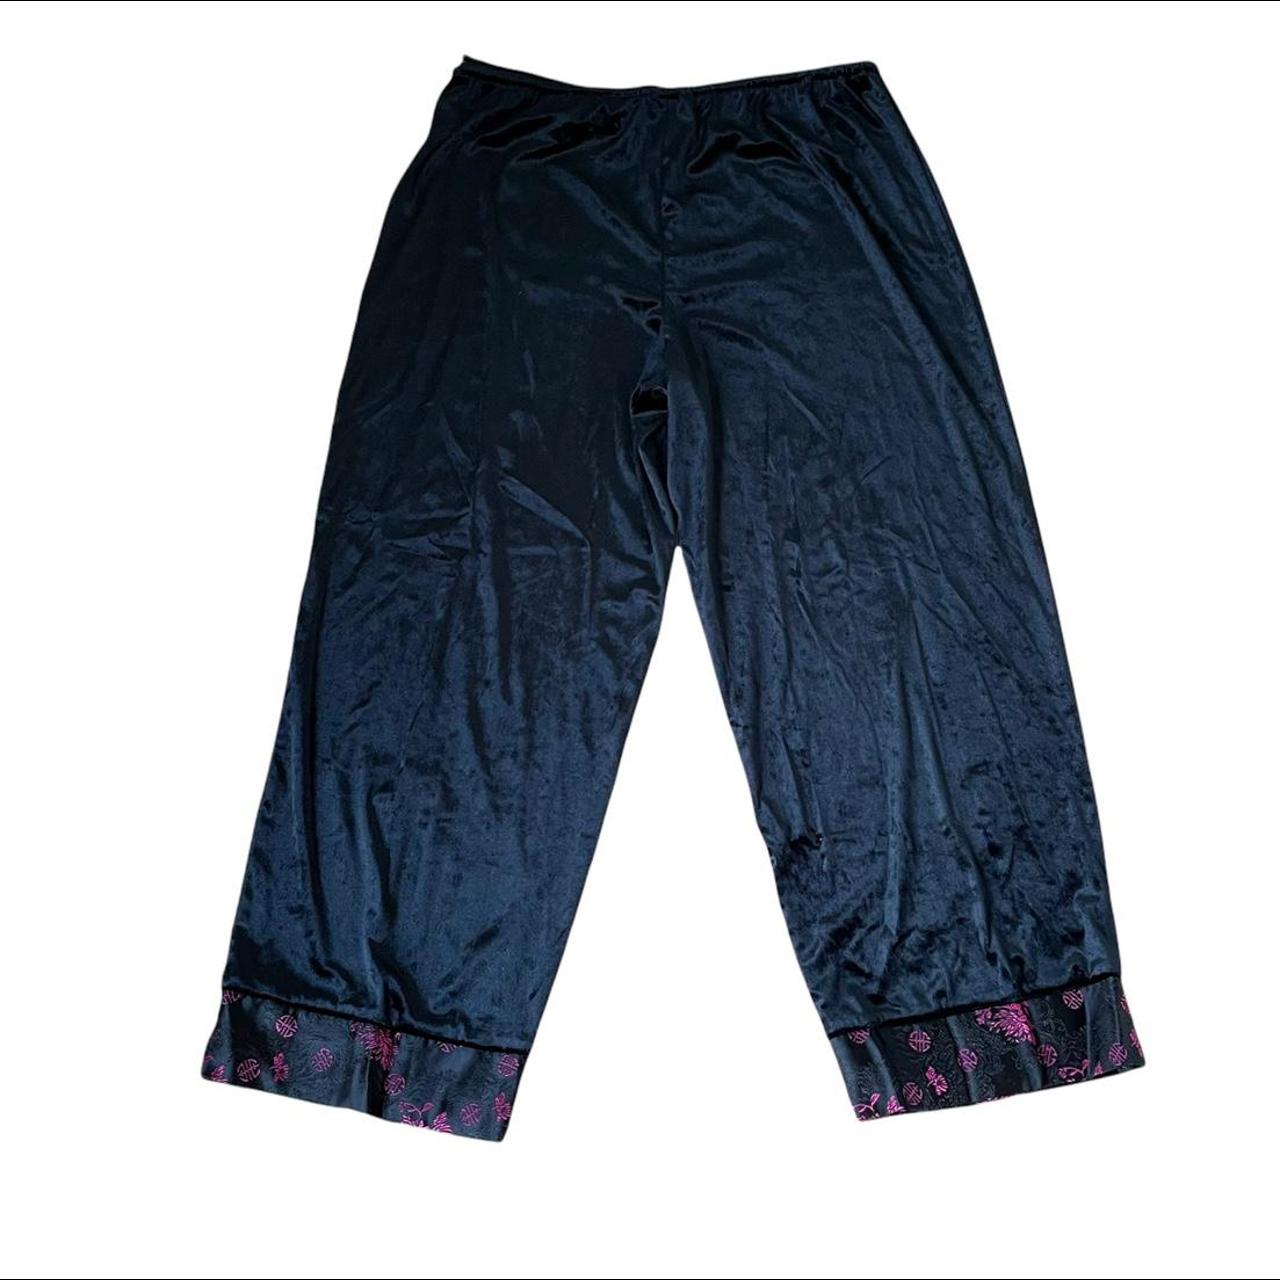 Product Image 2 - 🖤 velvet lounge pants 🖤
satin